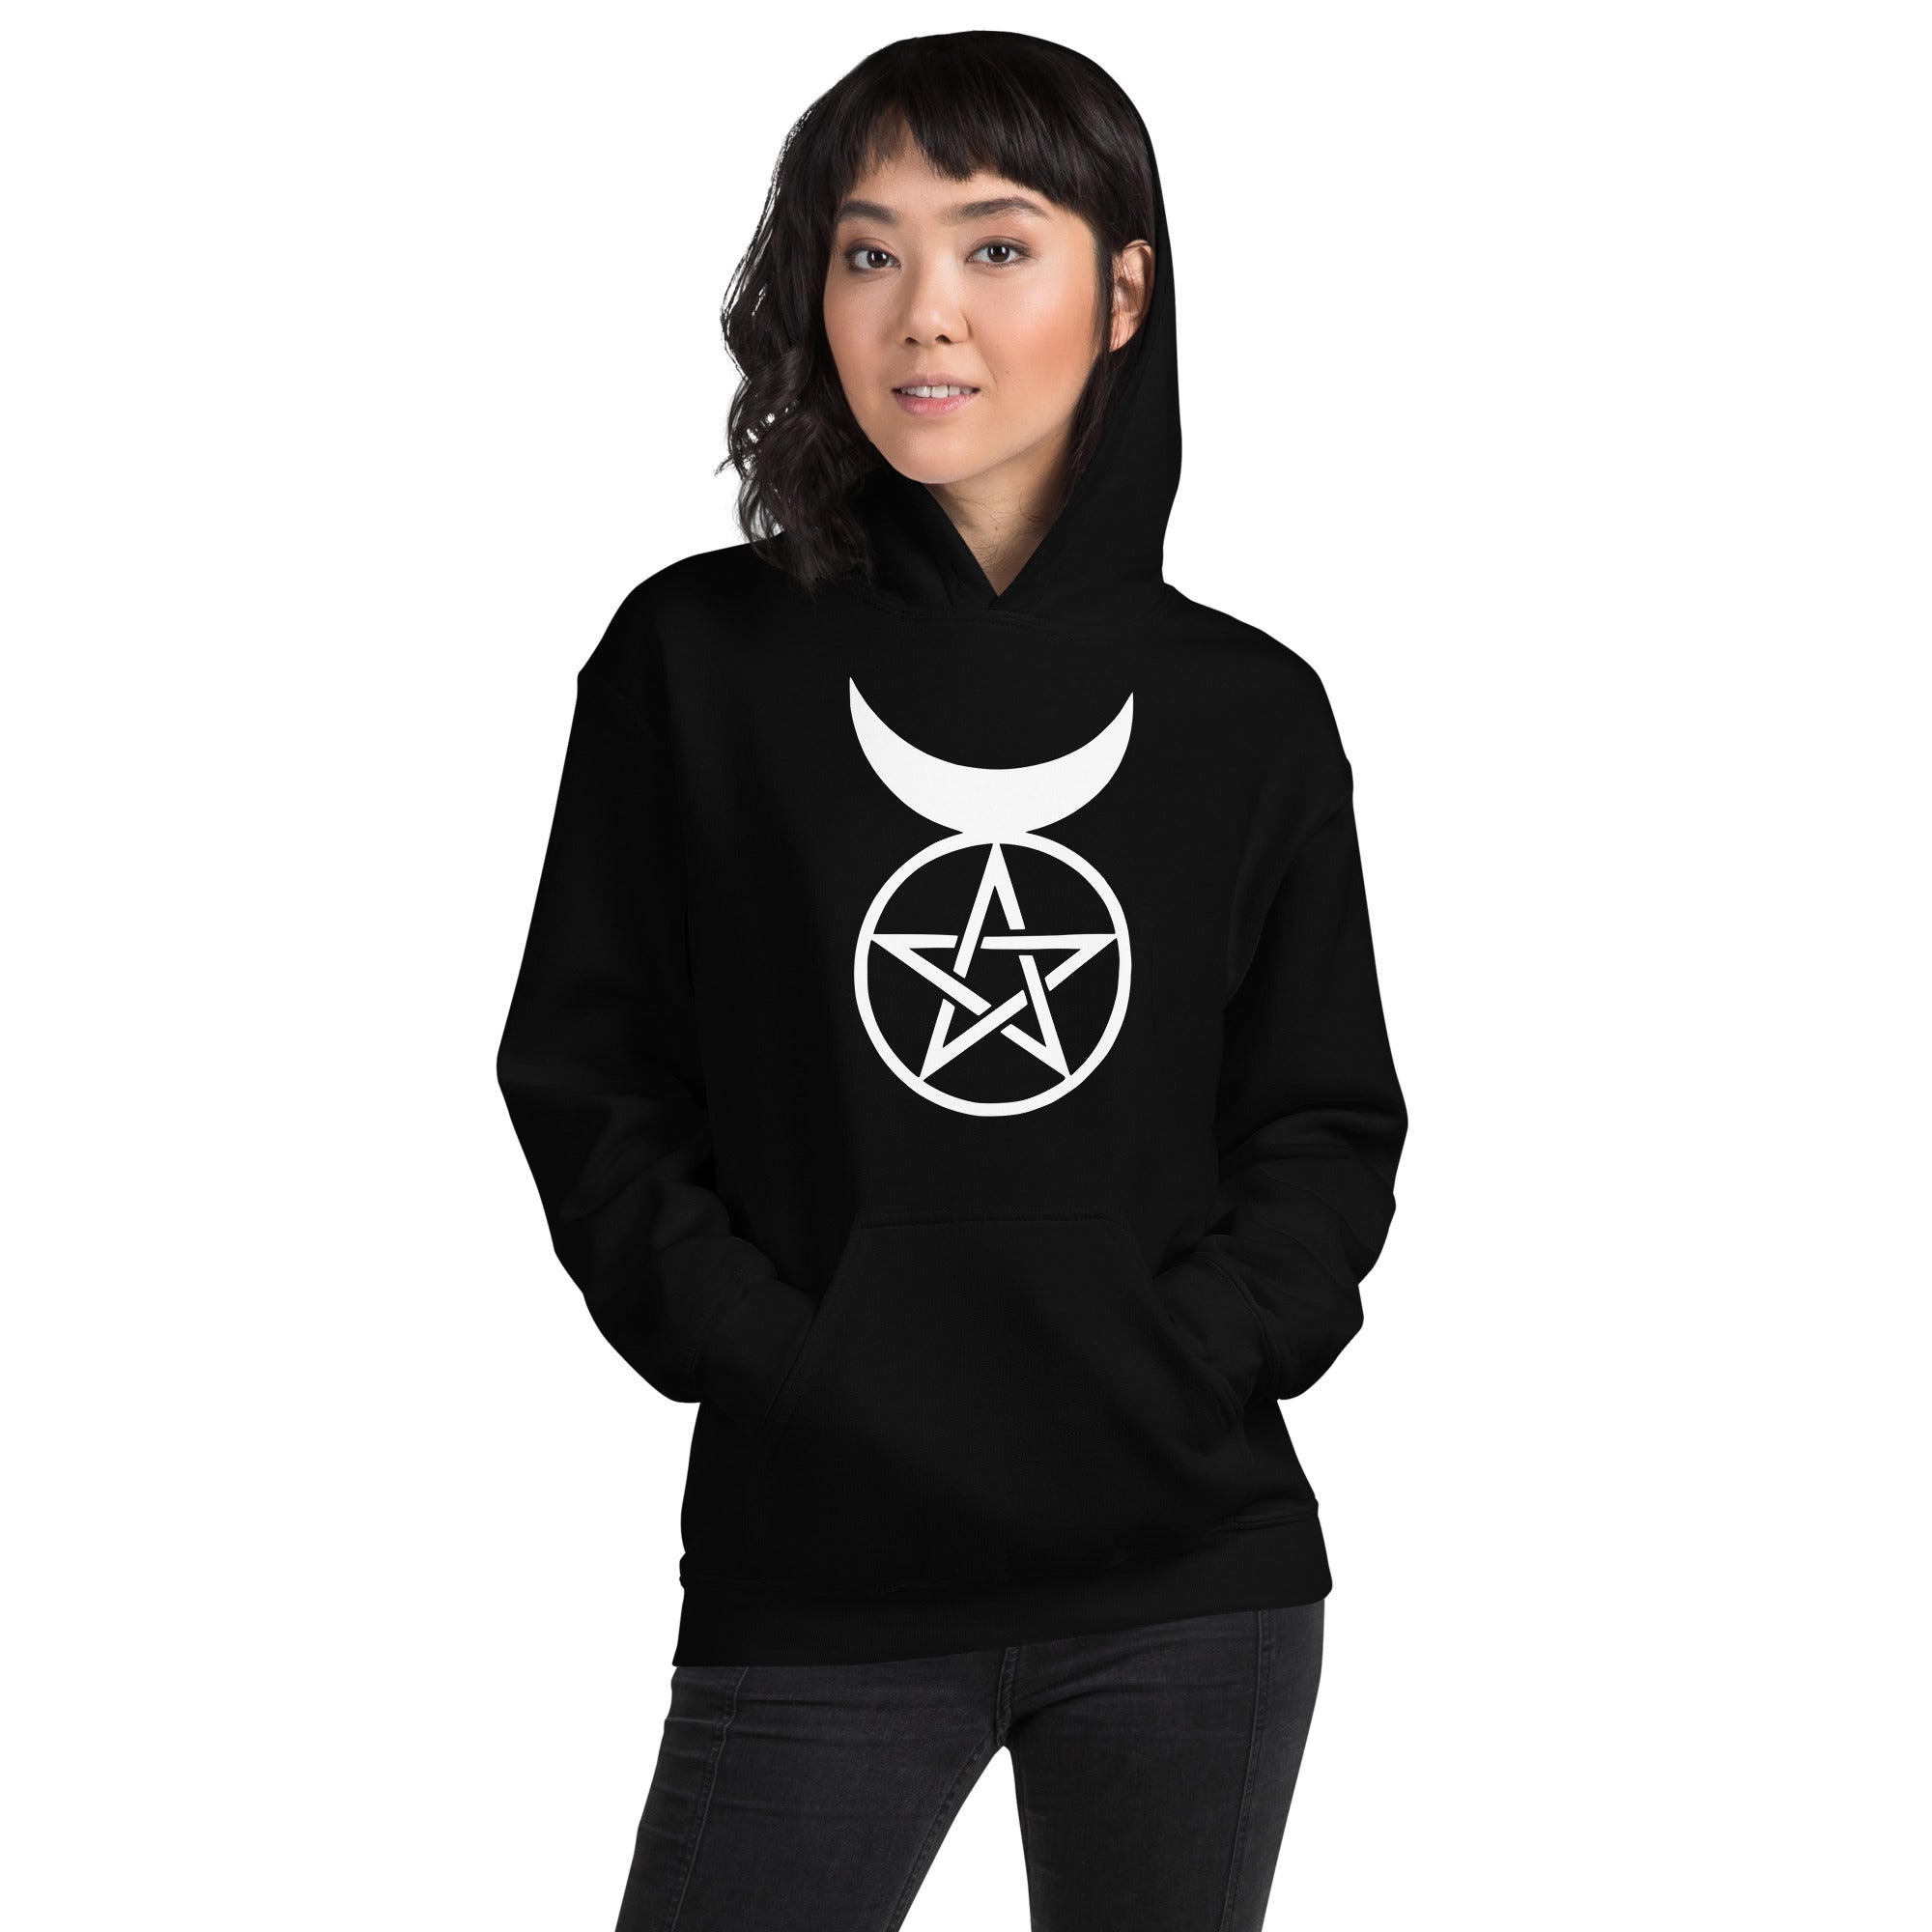 The Horned God Wicca Neopaganism Symbol Hoodie Sweatshirt